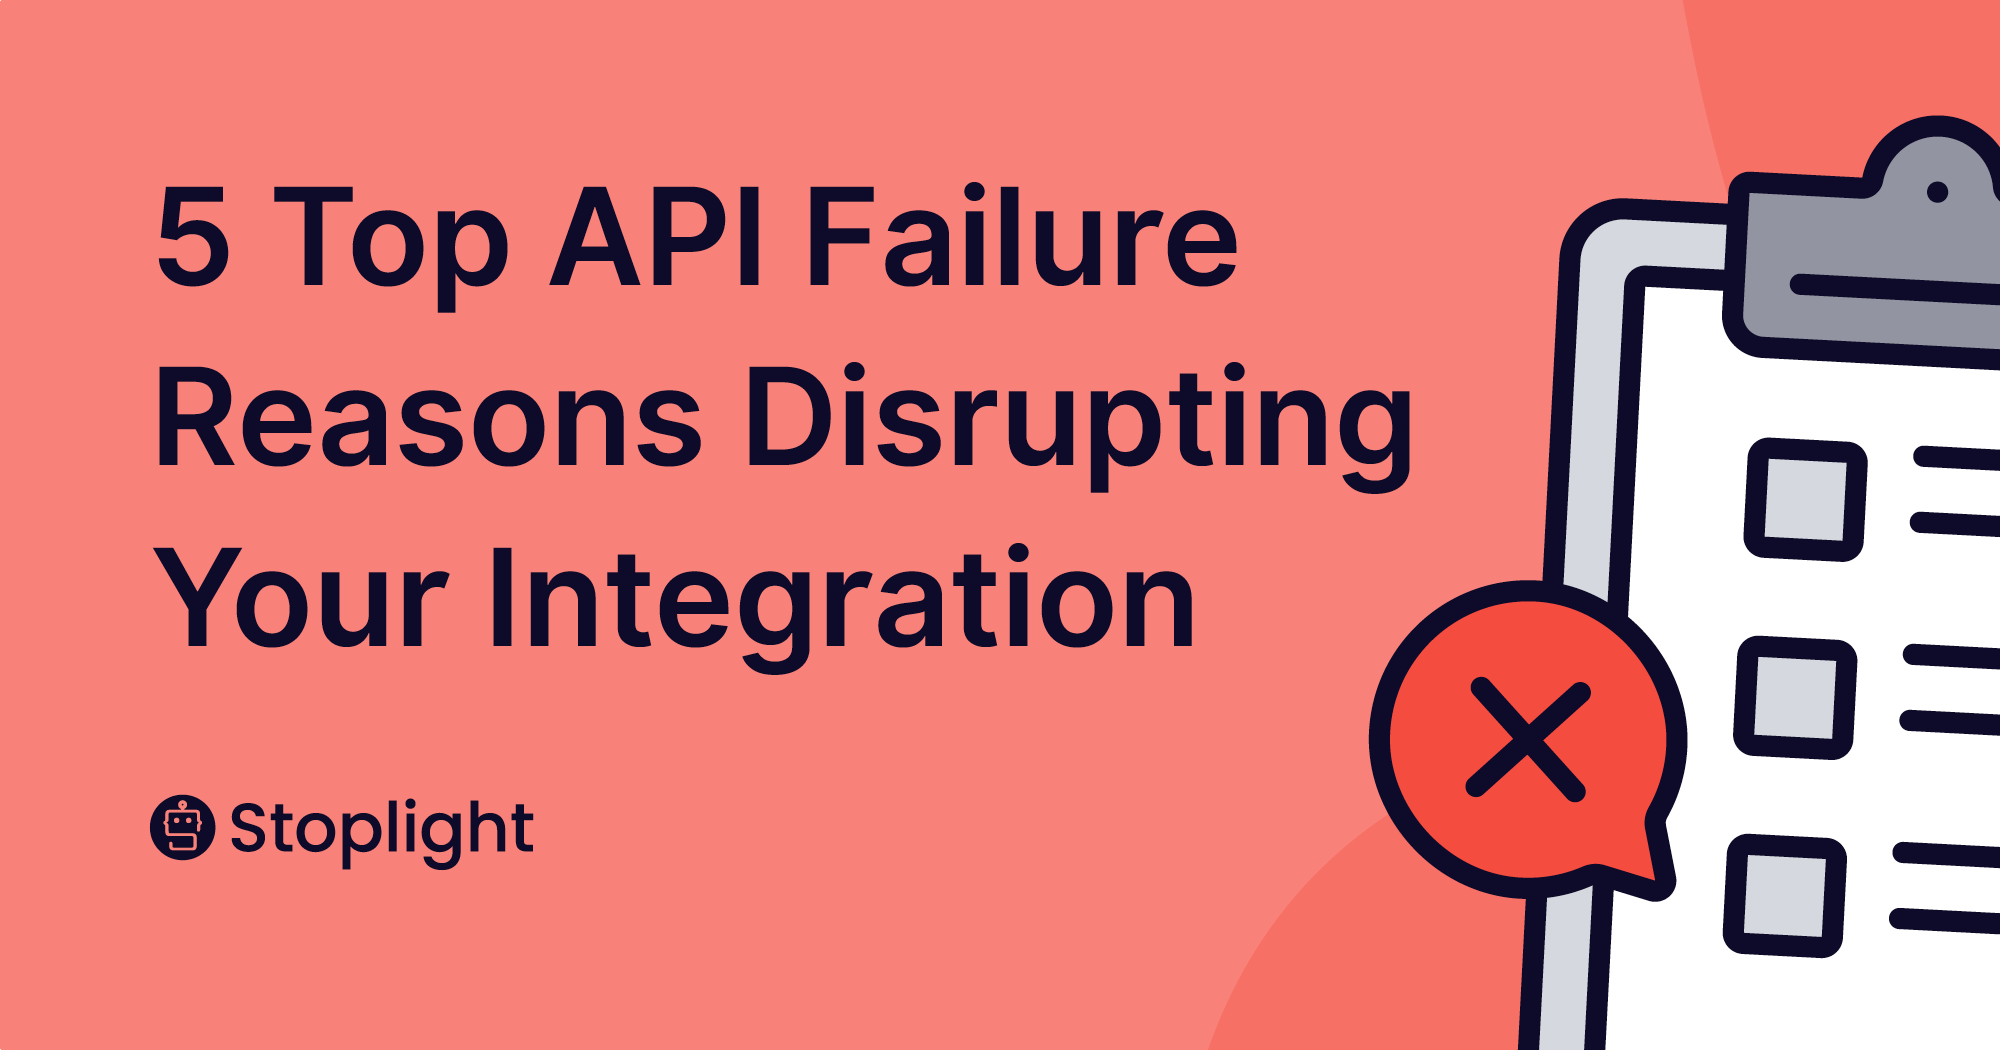 5 Top API Failure Reasons Disrupting Your Integration